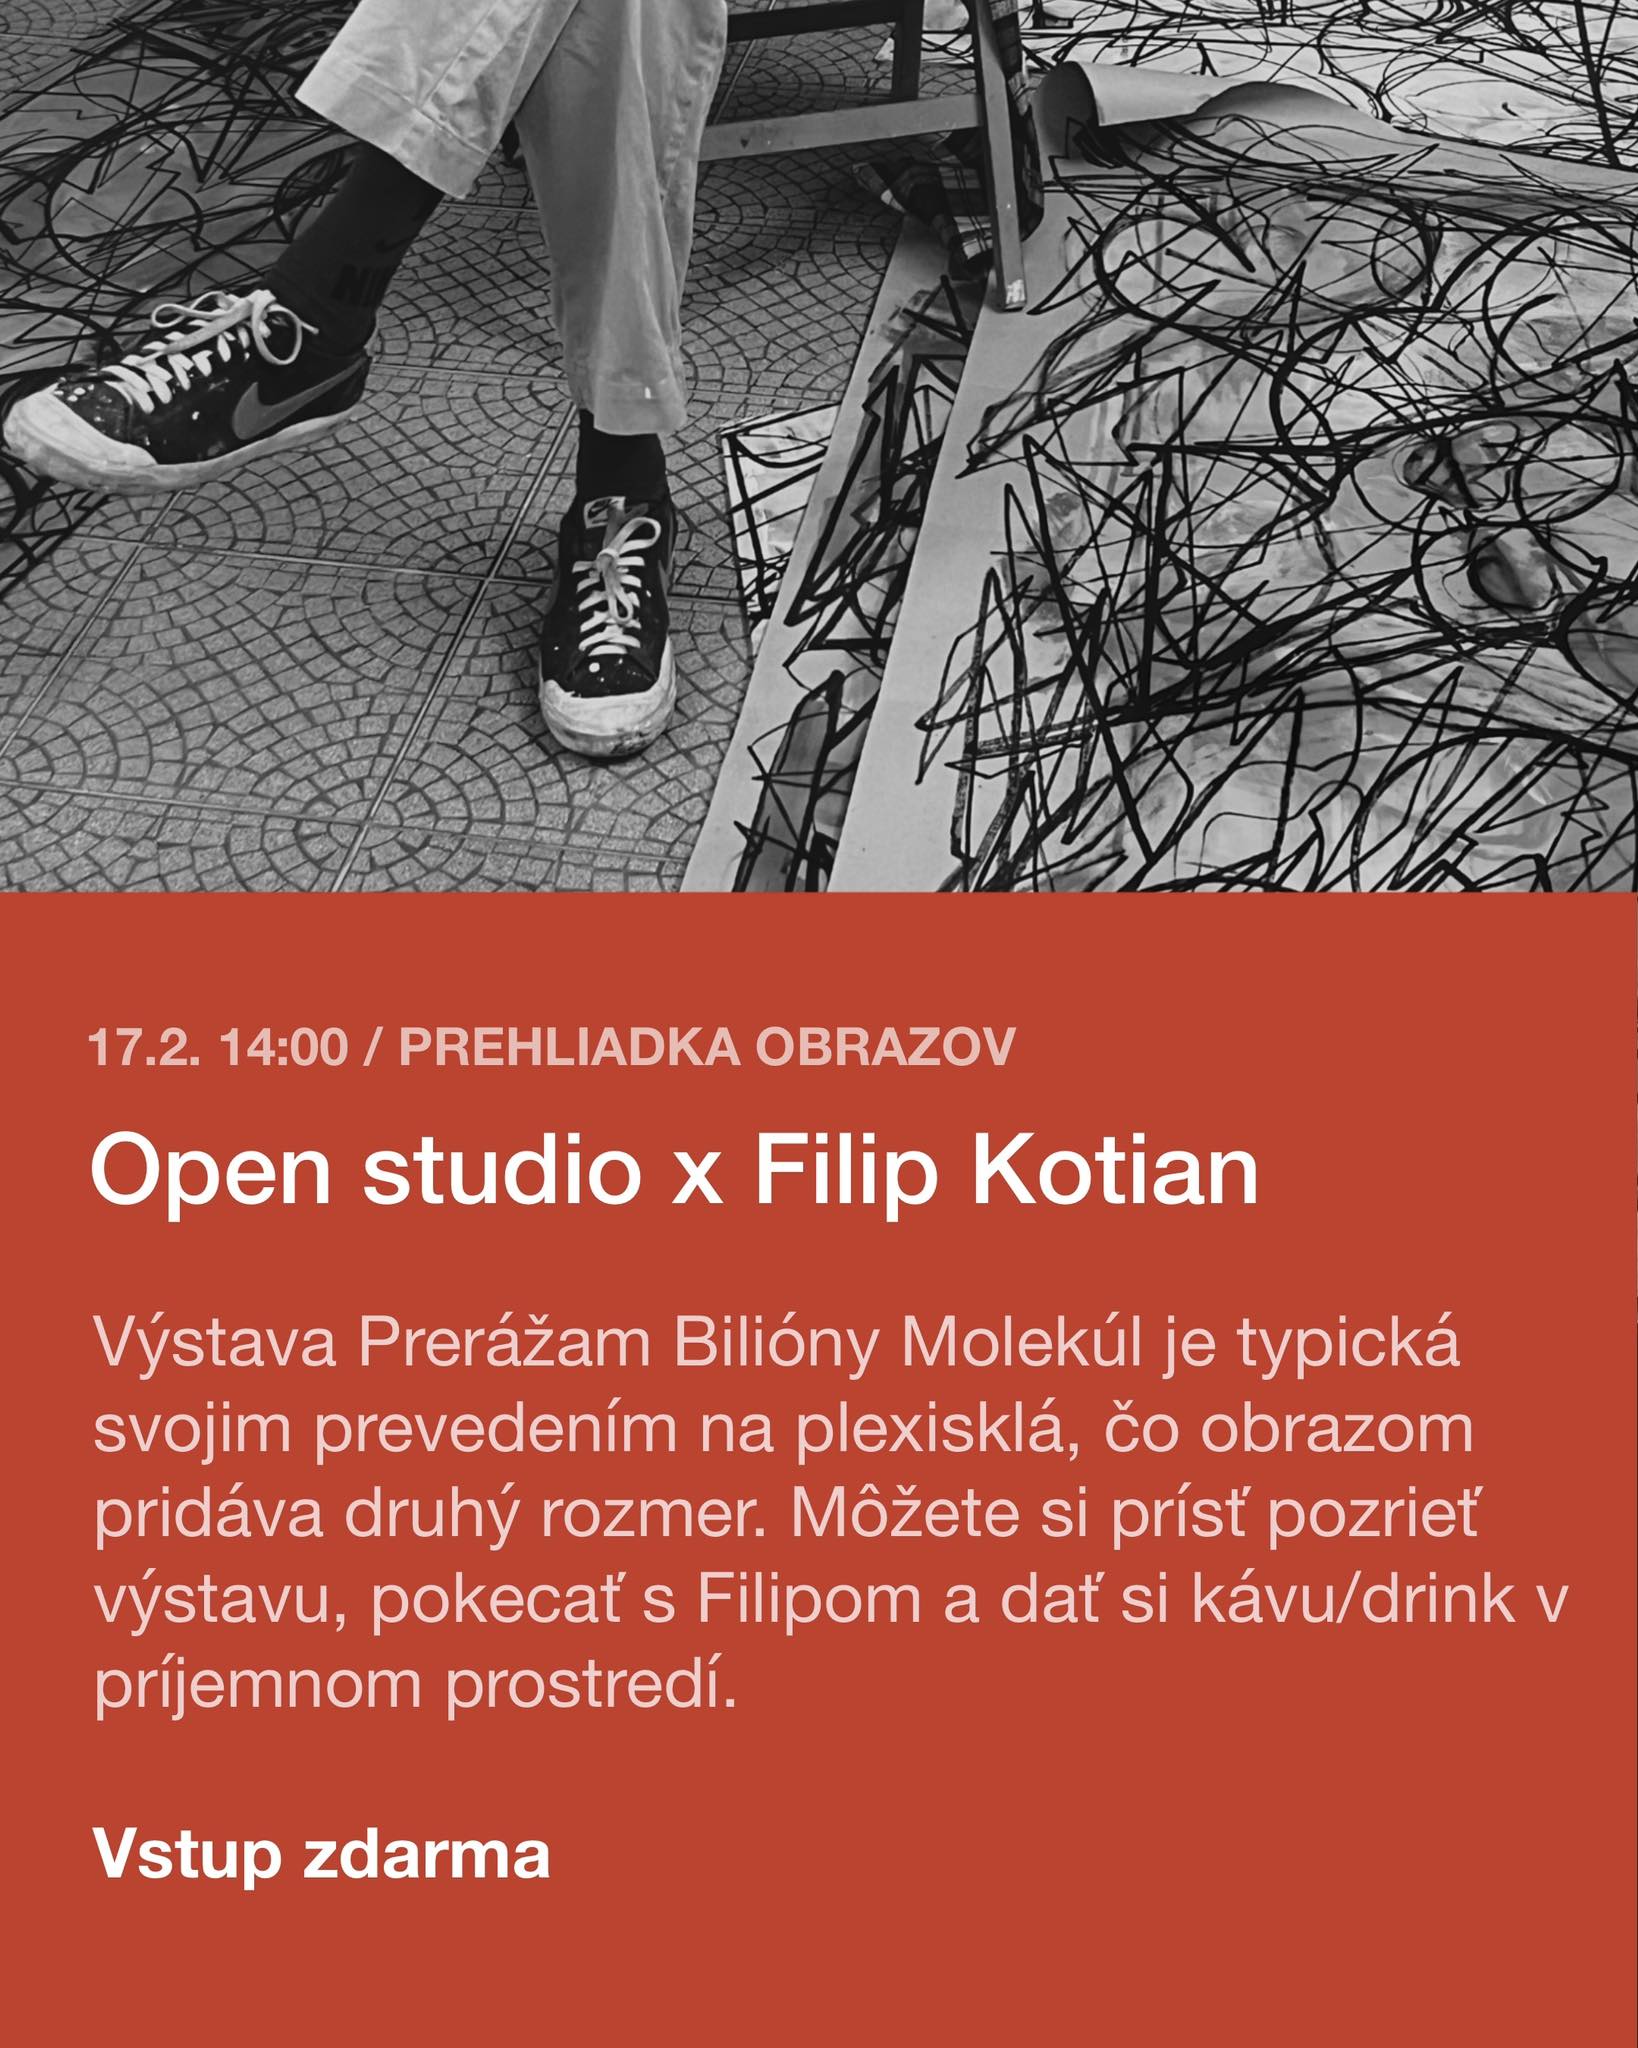 Open studio x Filip Kotian